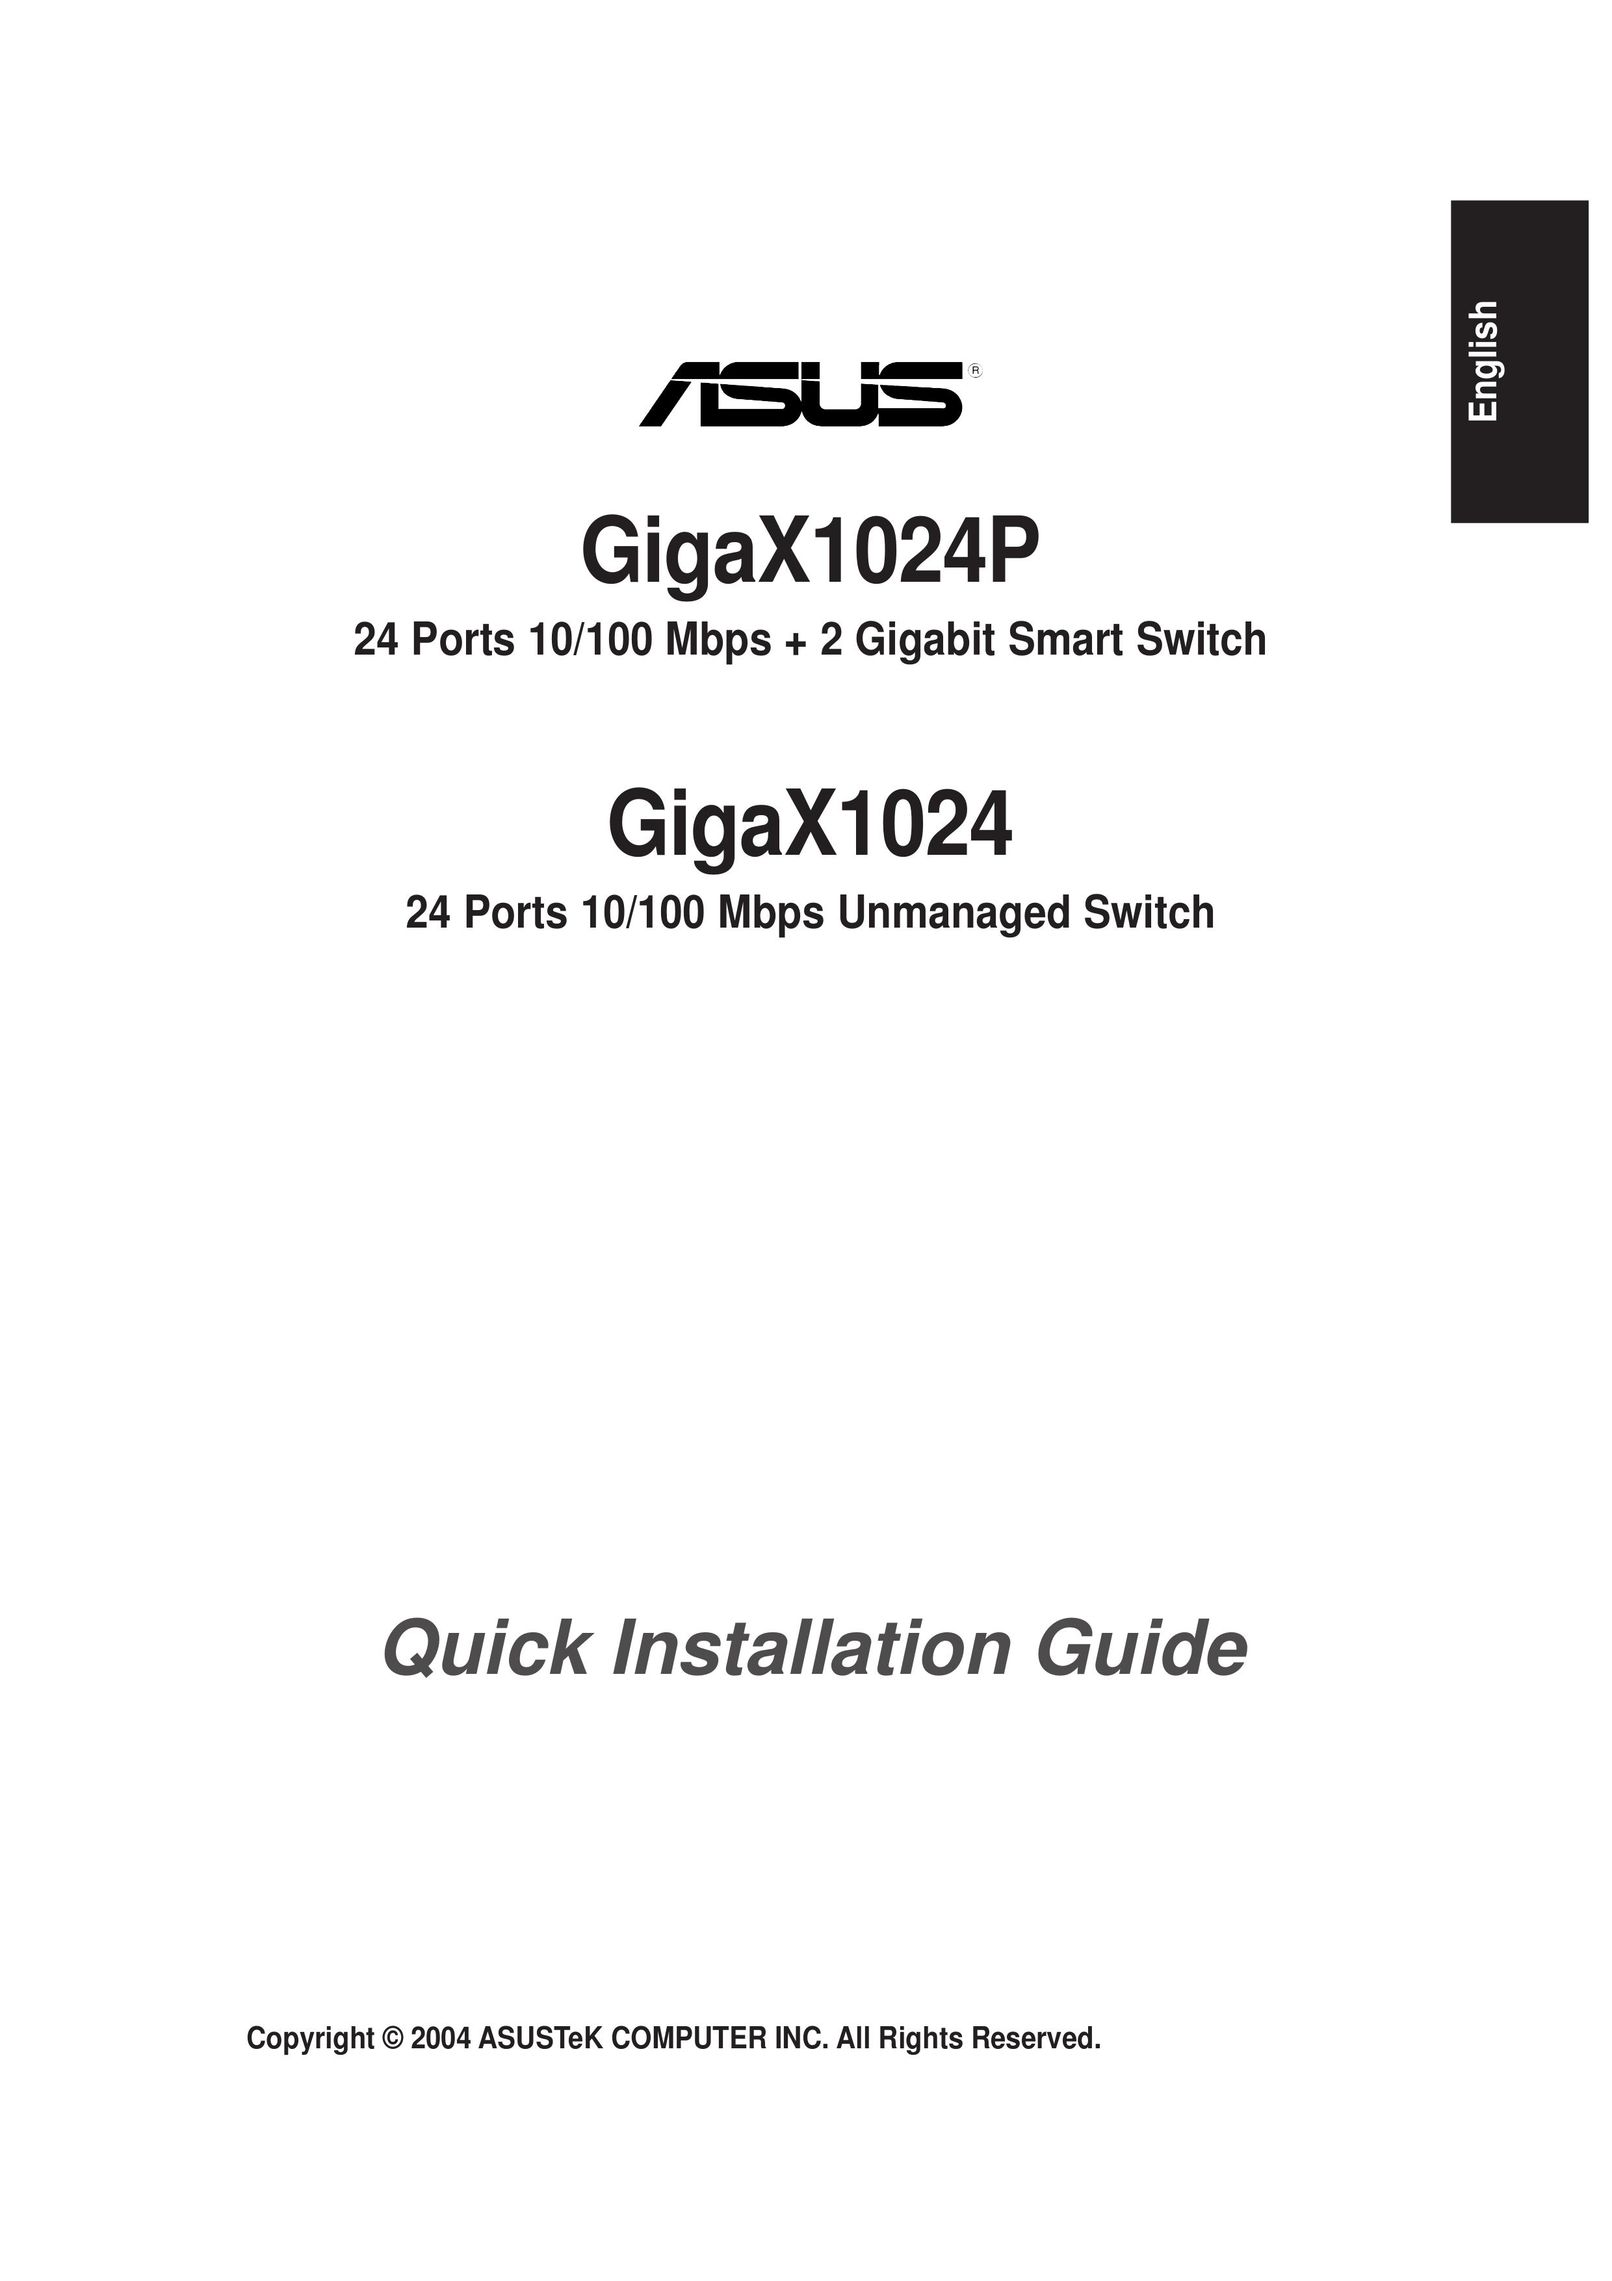 Asus GIGAX1024 Switch User Manual